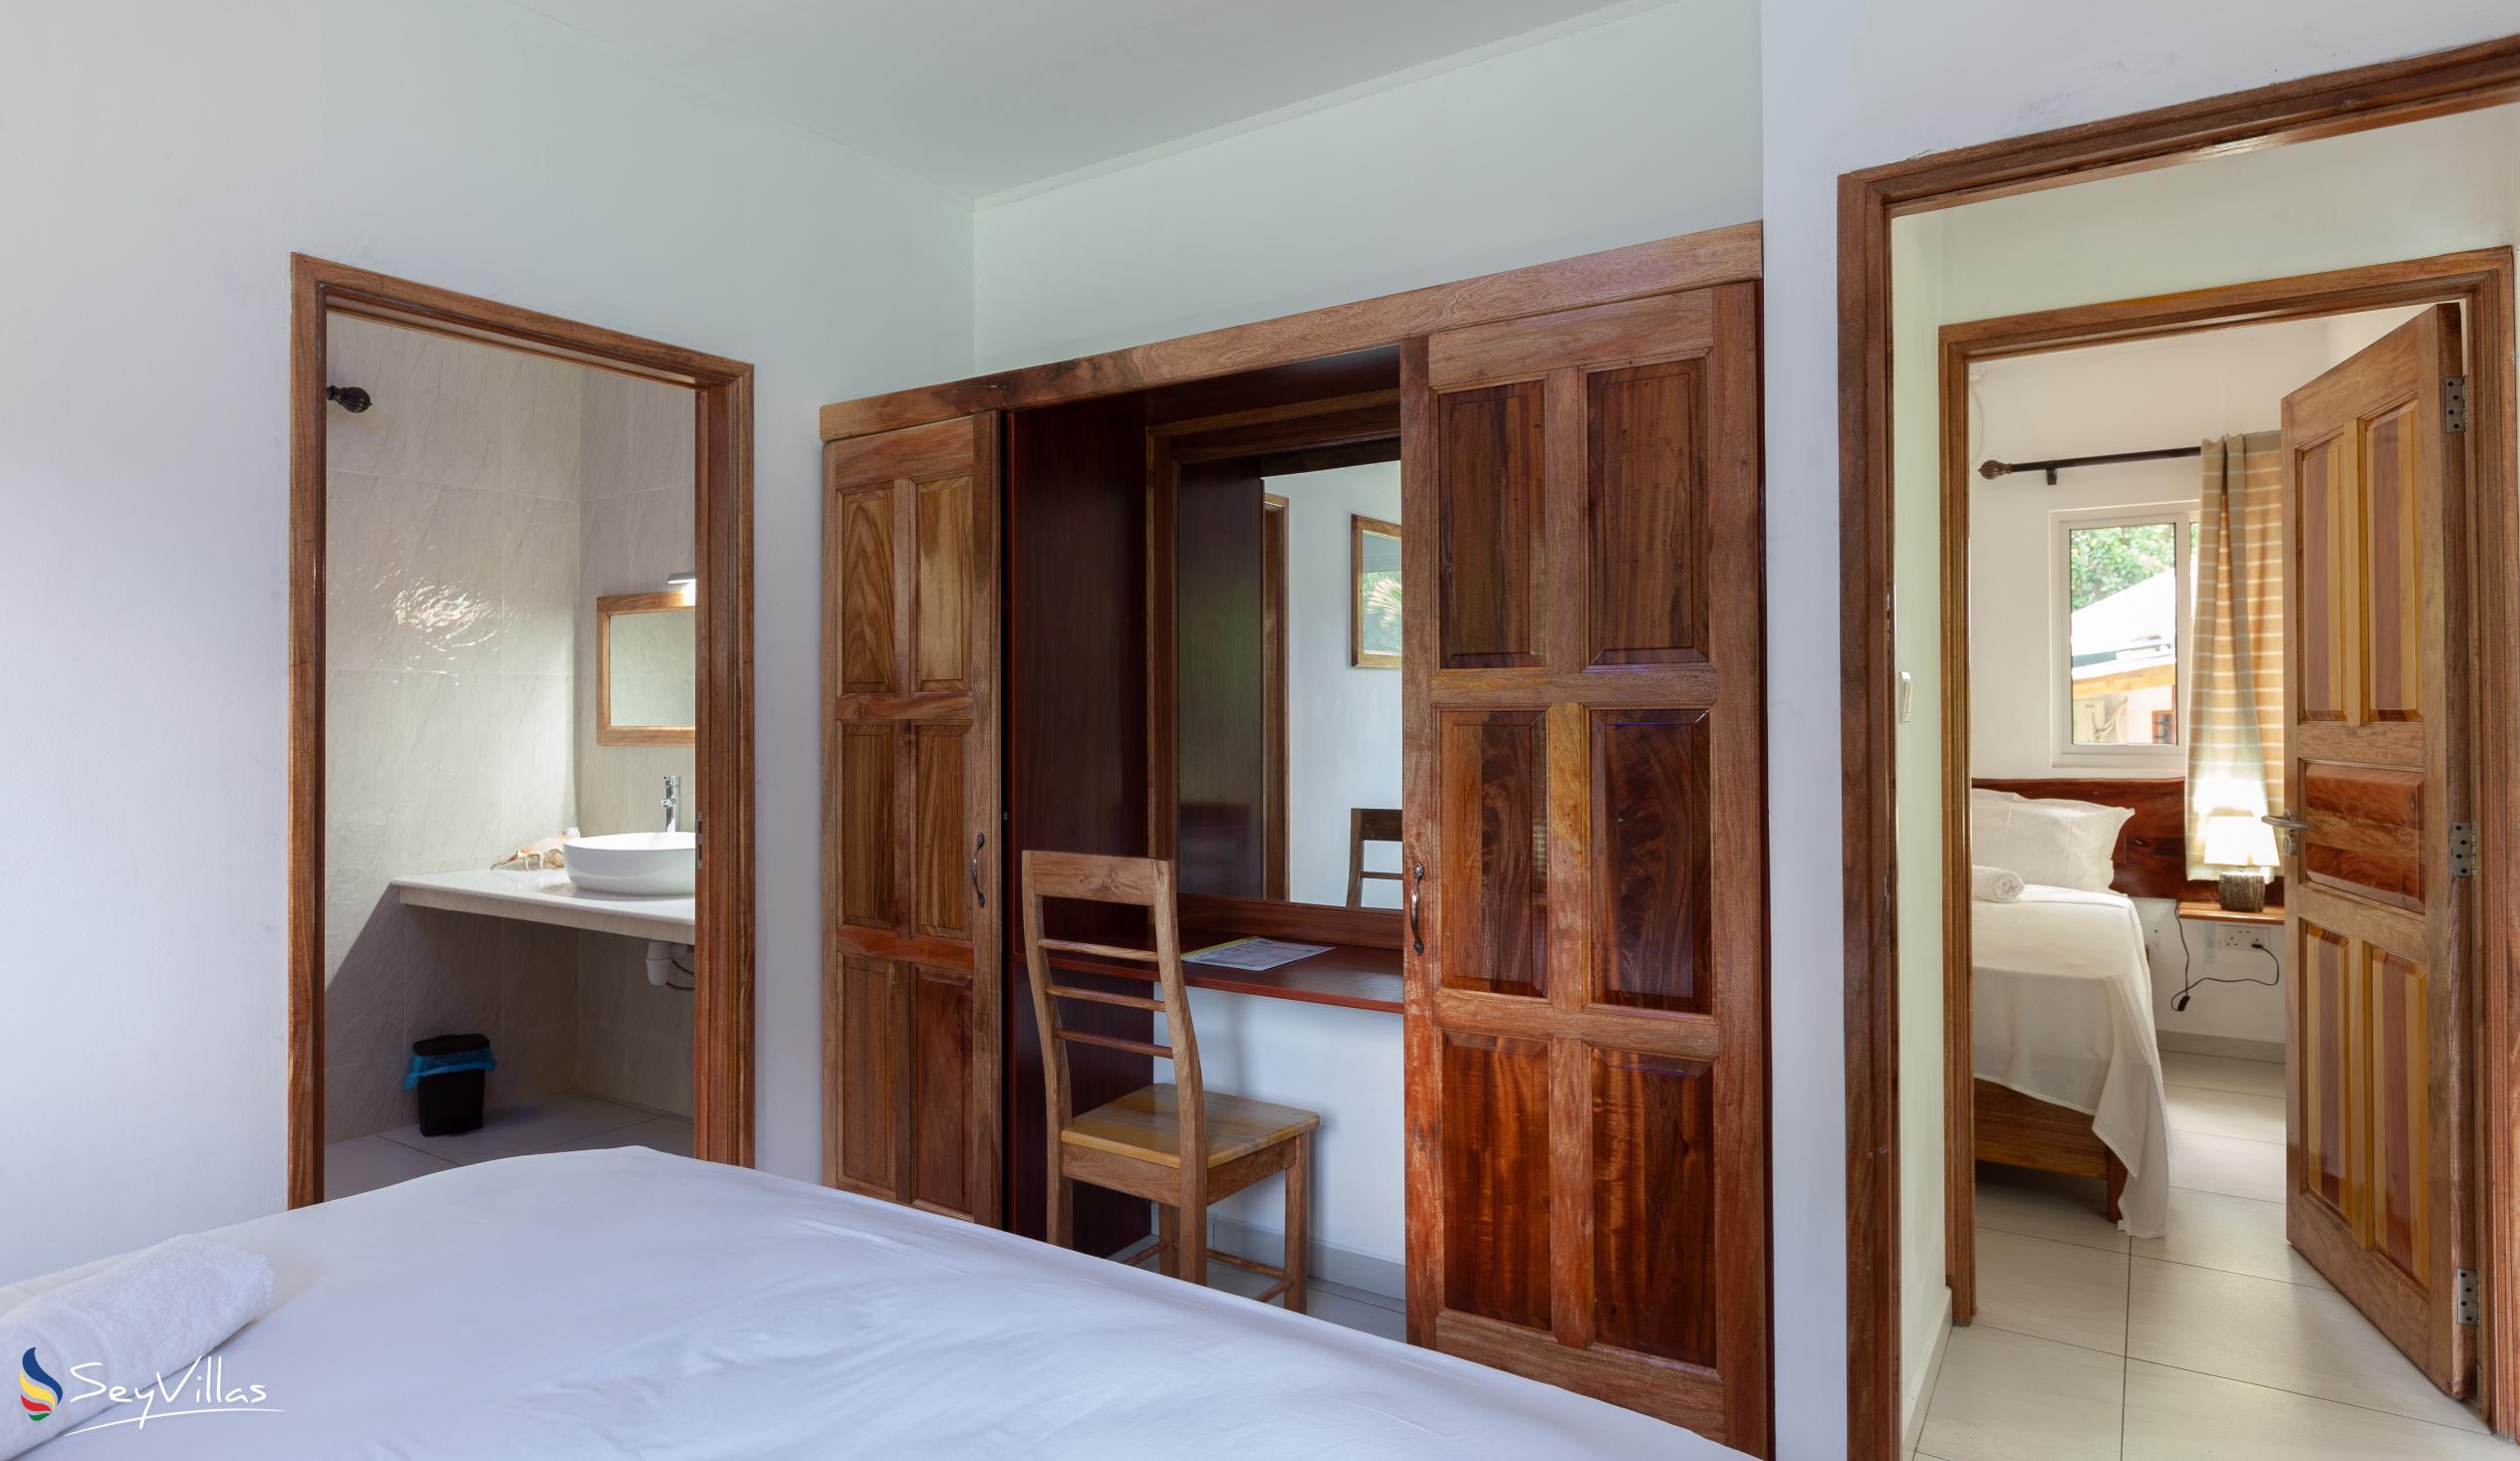 Foto 32: Fond B'Offay Lodge - Appartement 2 chambres - Praslin (Seychelles)